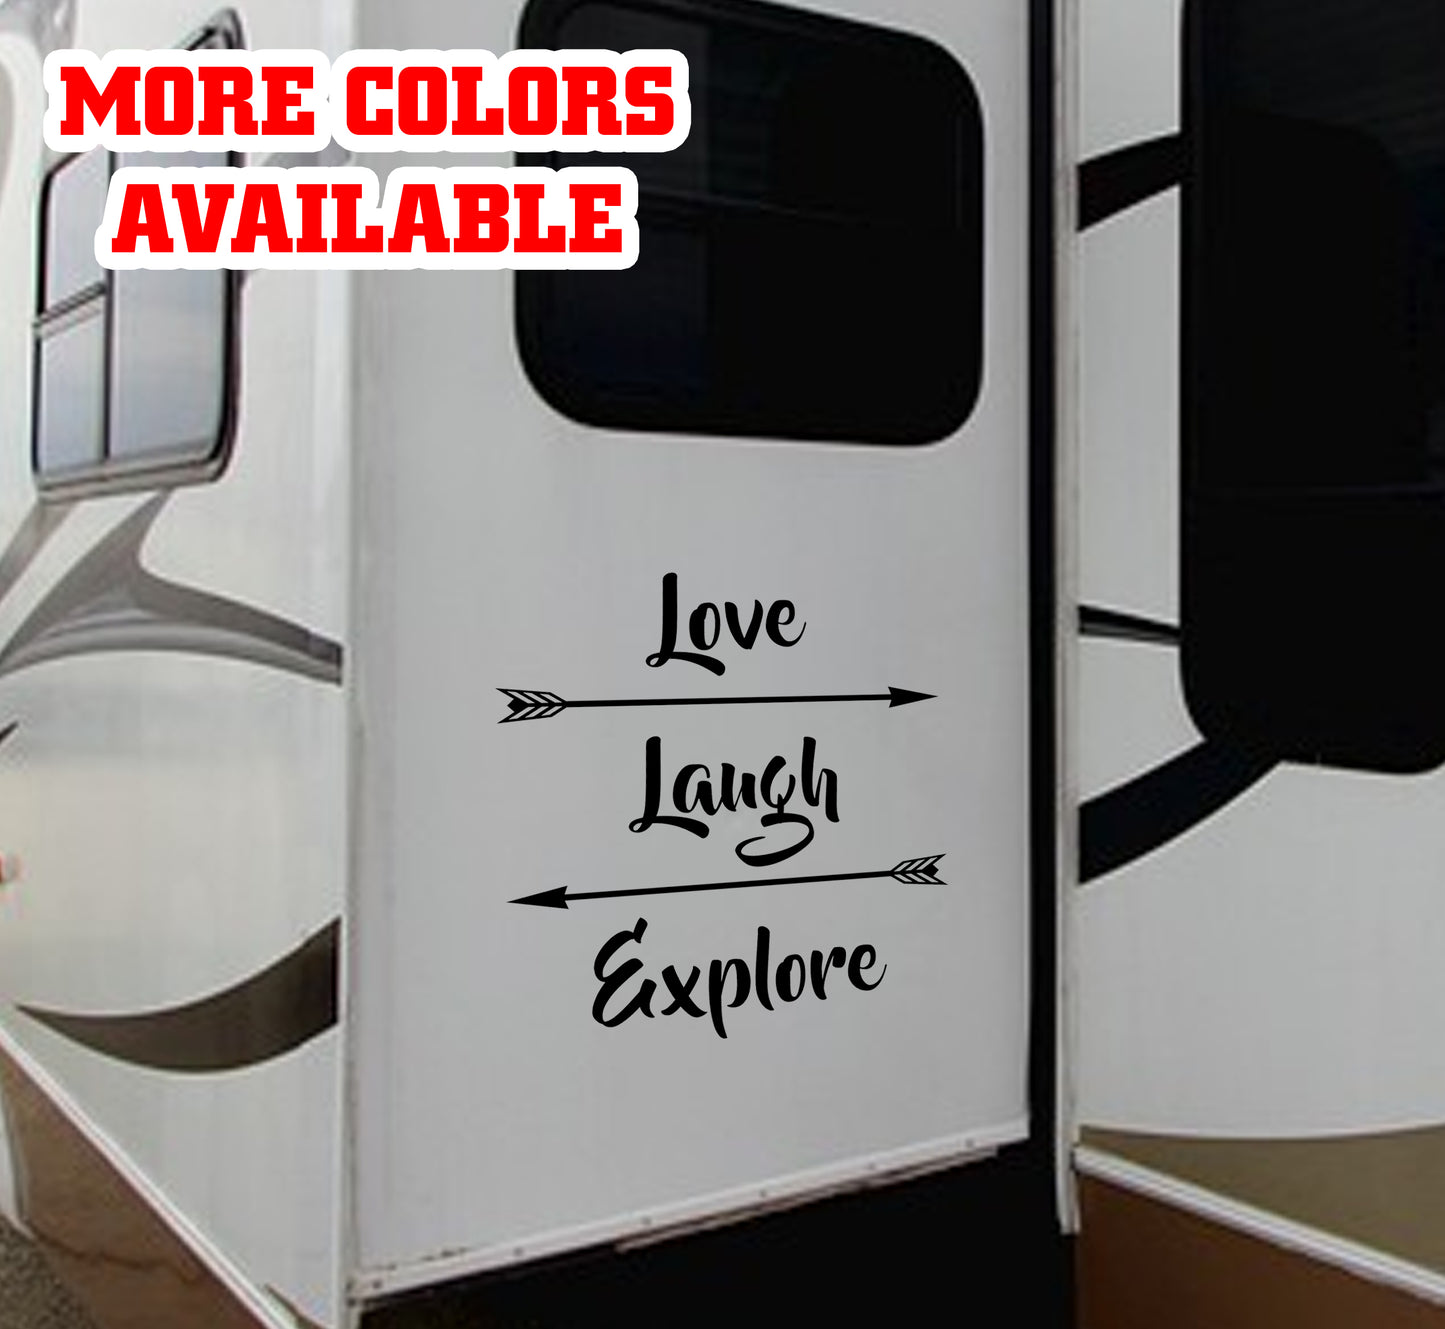 Love Laugh Explore Vinyl Sticker Decal Graphic | RV Slide Decal RV Door Decal Travel Trailer Camper 5th wheel stickers